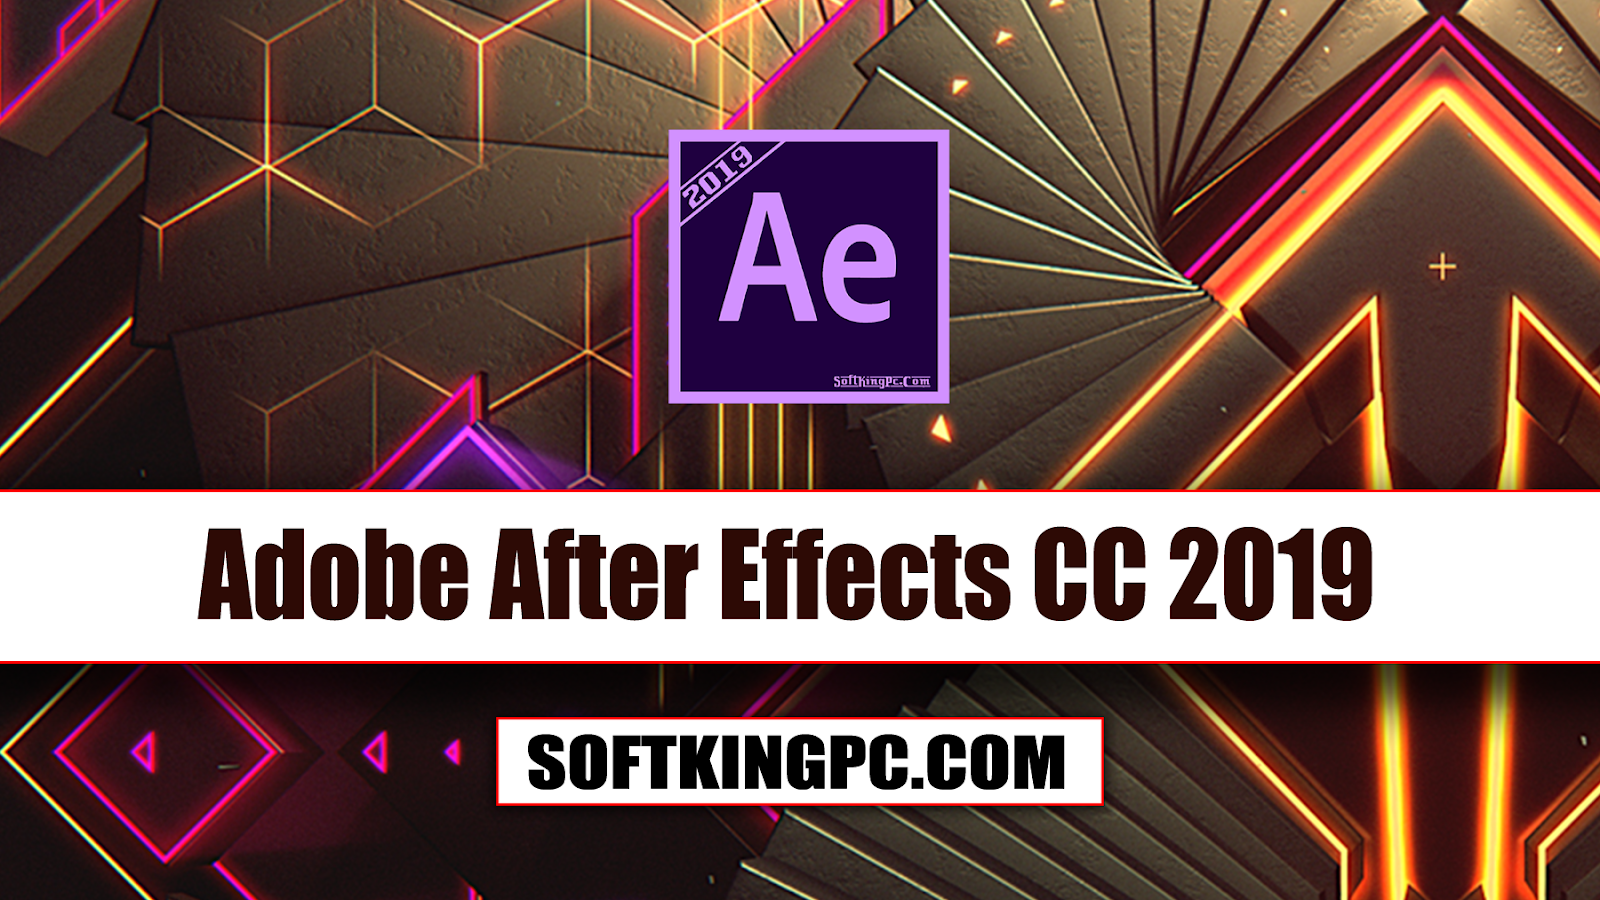 After Effects 2019. Adobe after Effects cc 2019. Adobe after Effects 2019. Adobe mem.